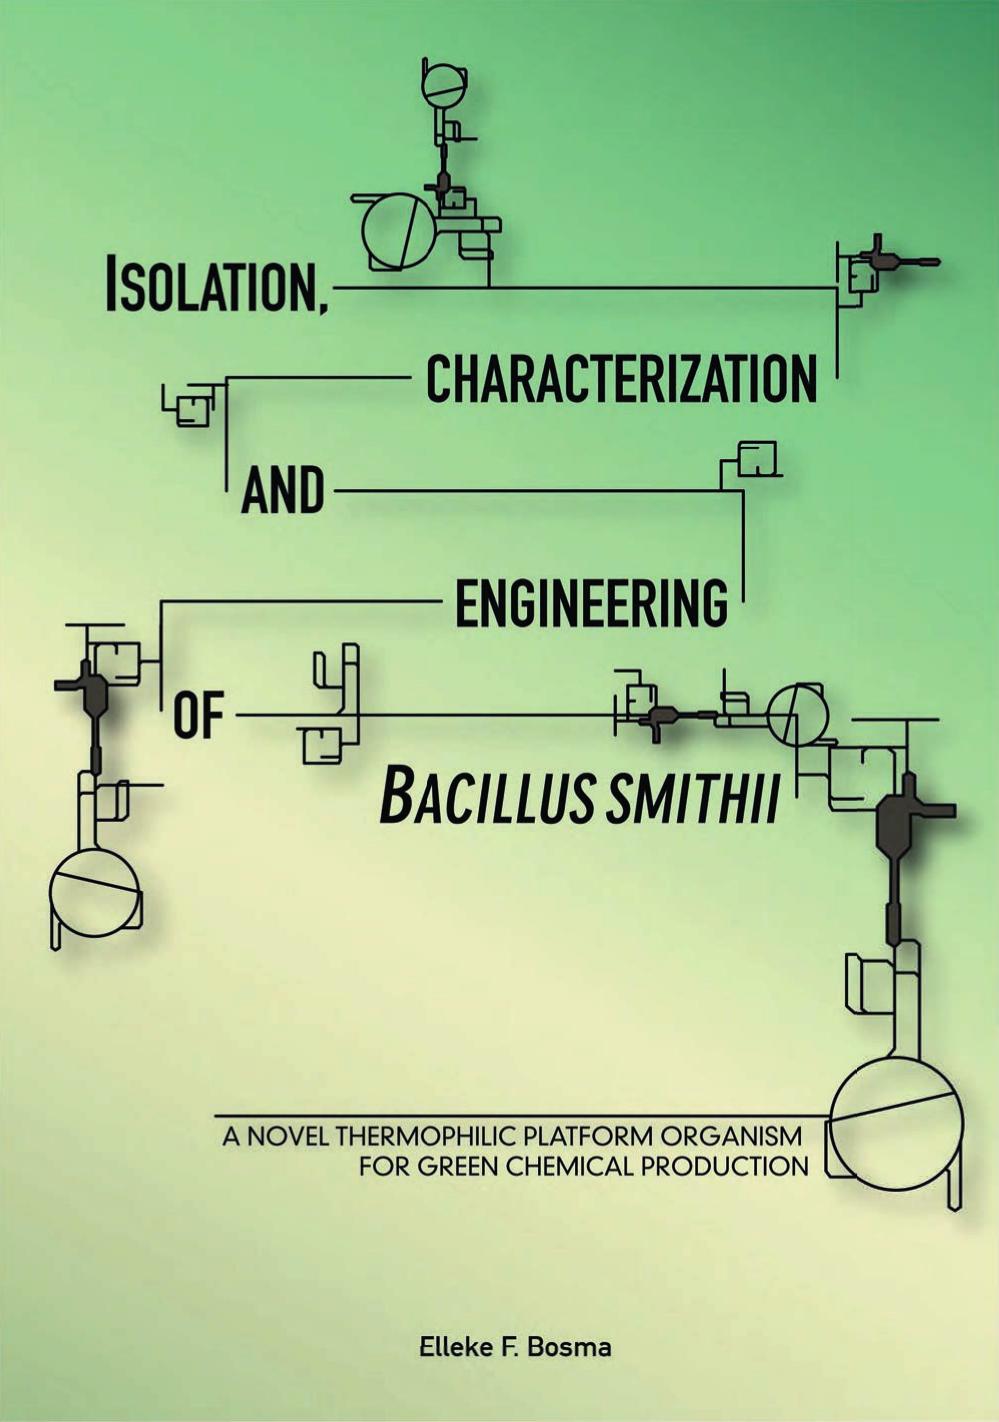 Isolation, characterization and engineering of Bacillus smithii 2015